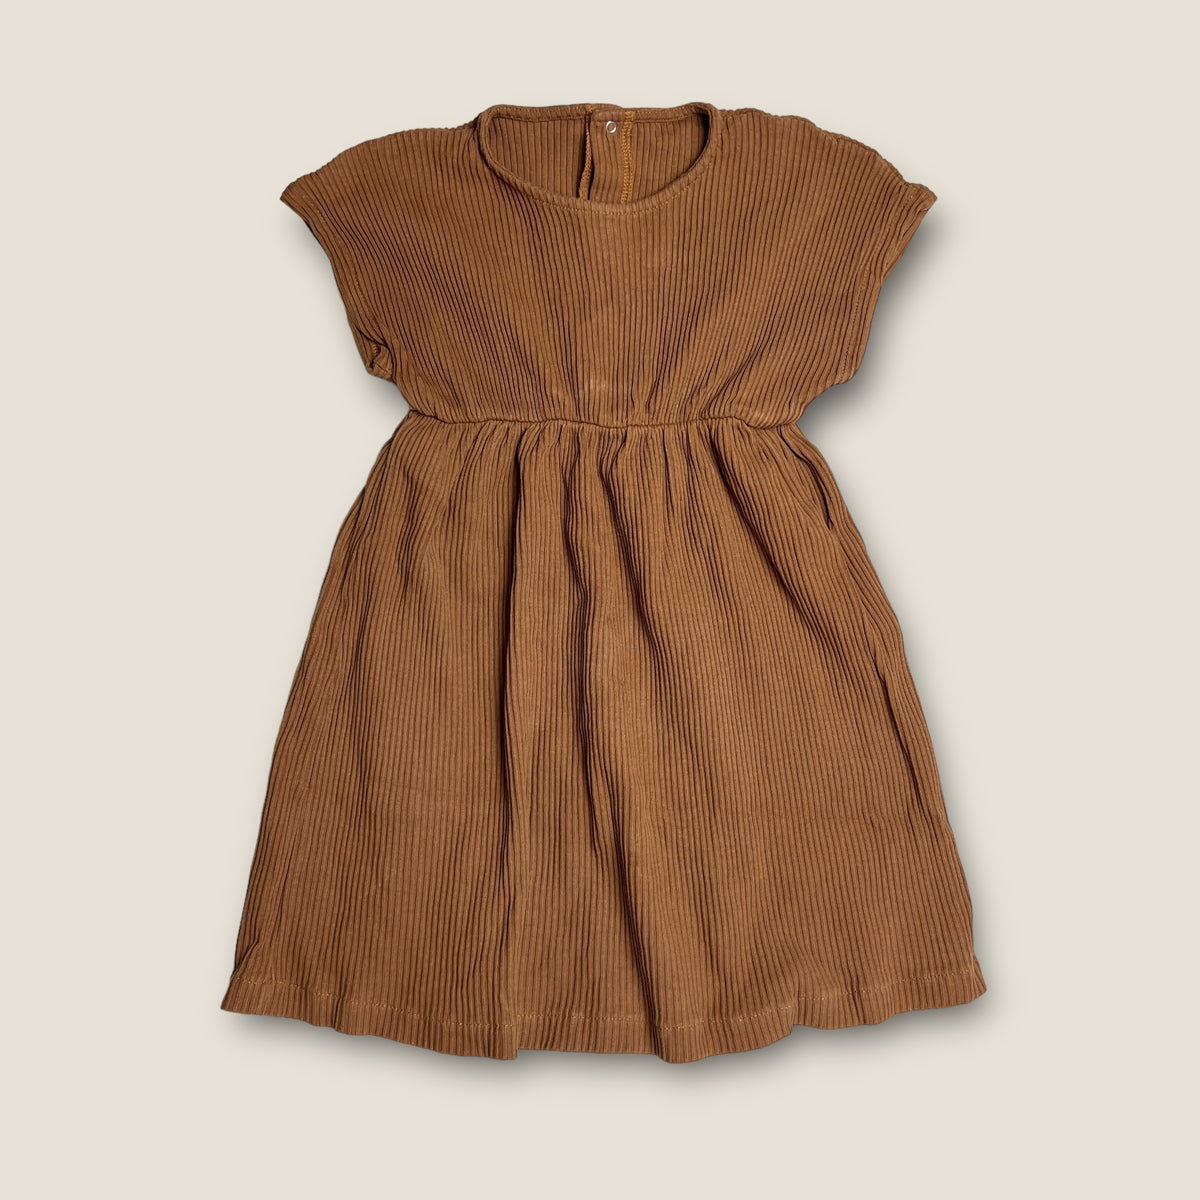 Poudre Organic Dress size 7-8 years